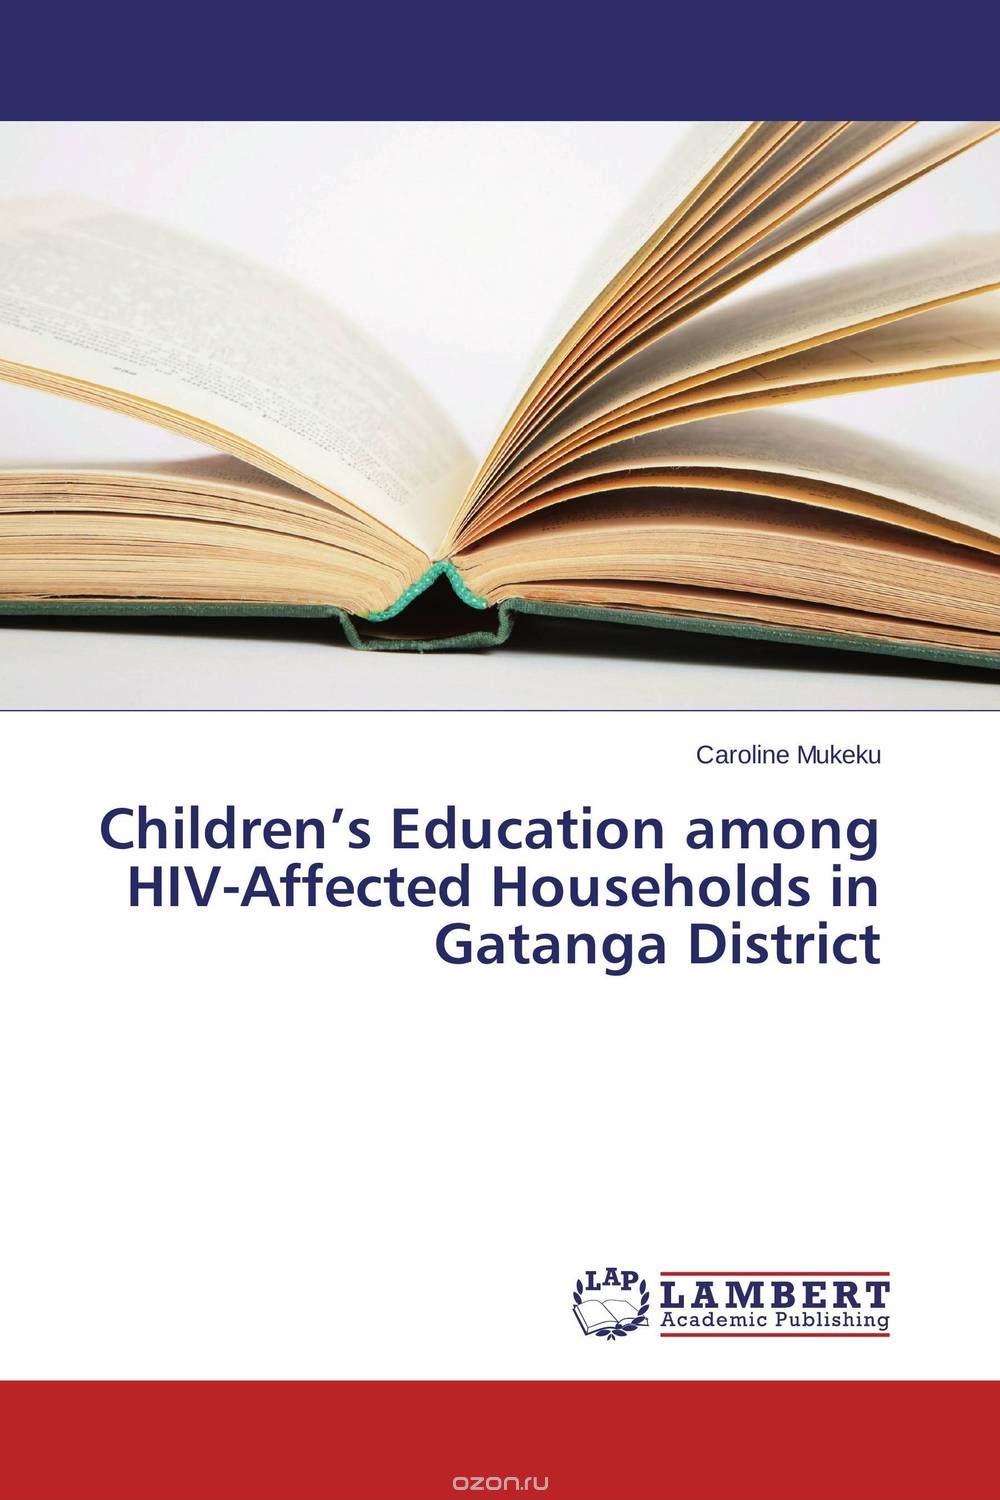 Скачать книгу "Children’s Education among HIV-Affected Households in Gatanga District"